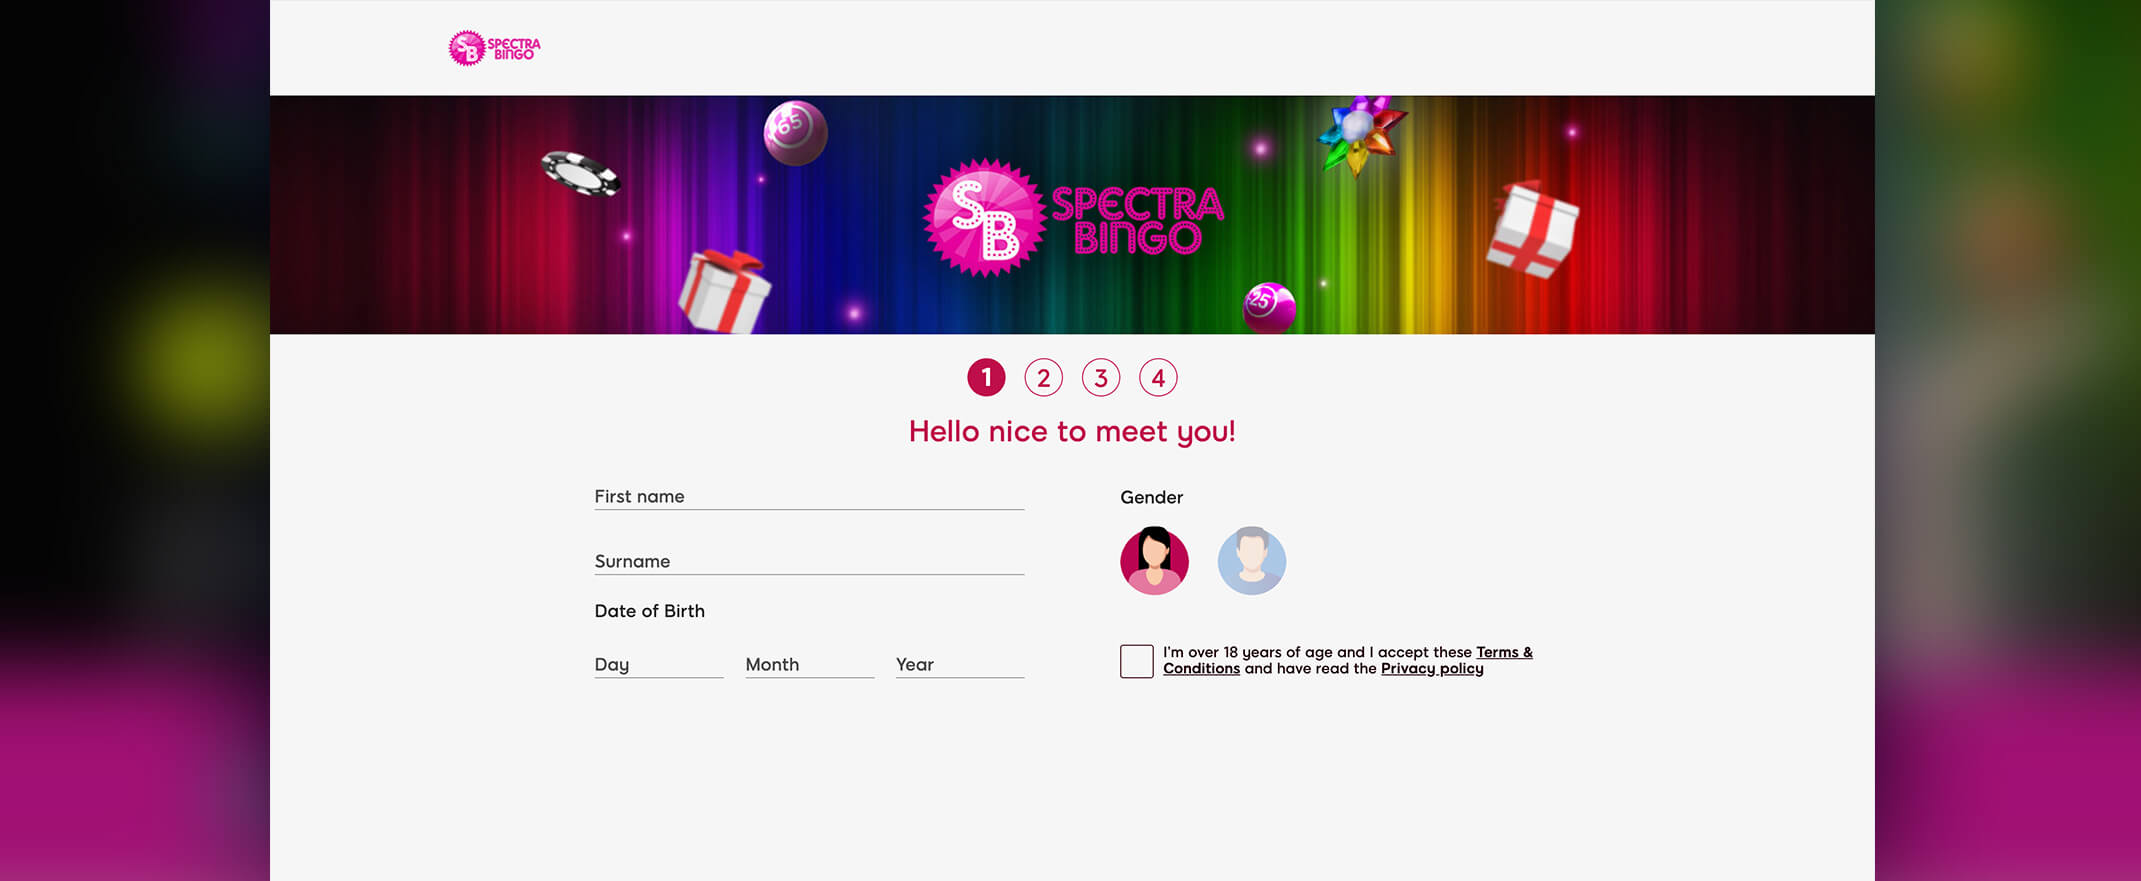 Spectra Bingo registration screenshot #ad